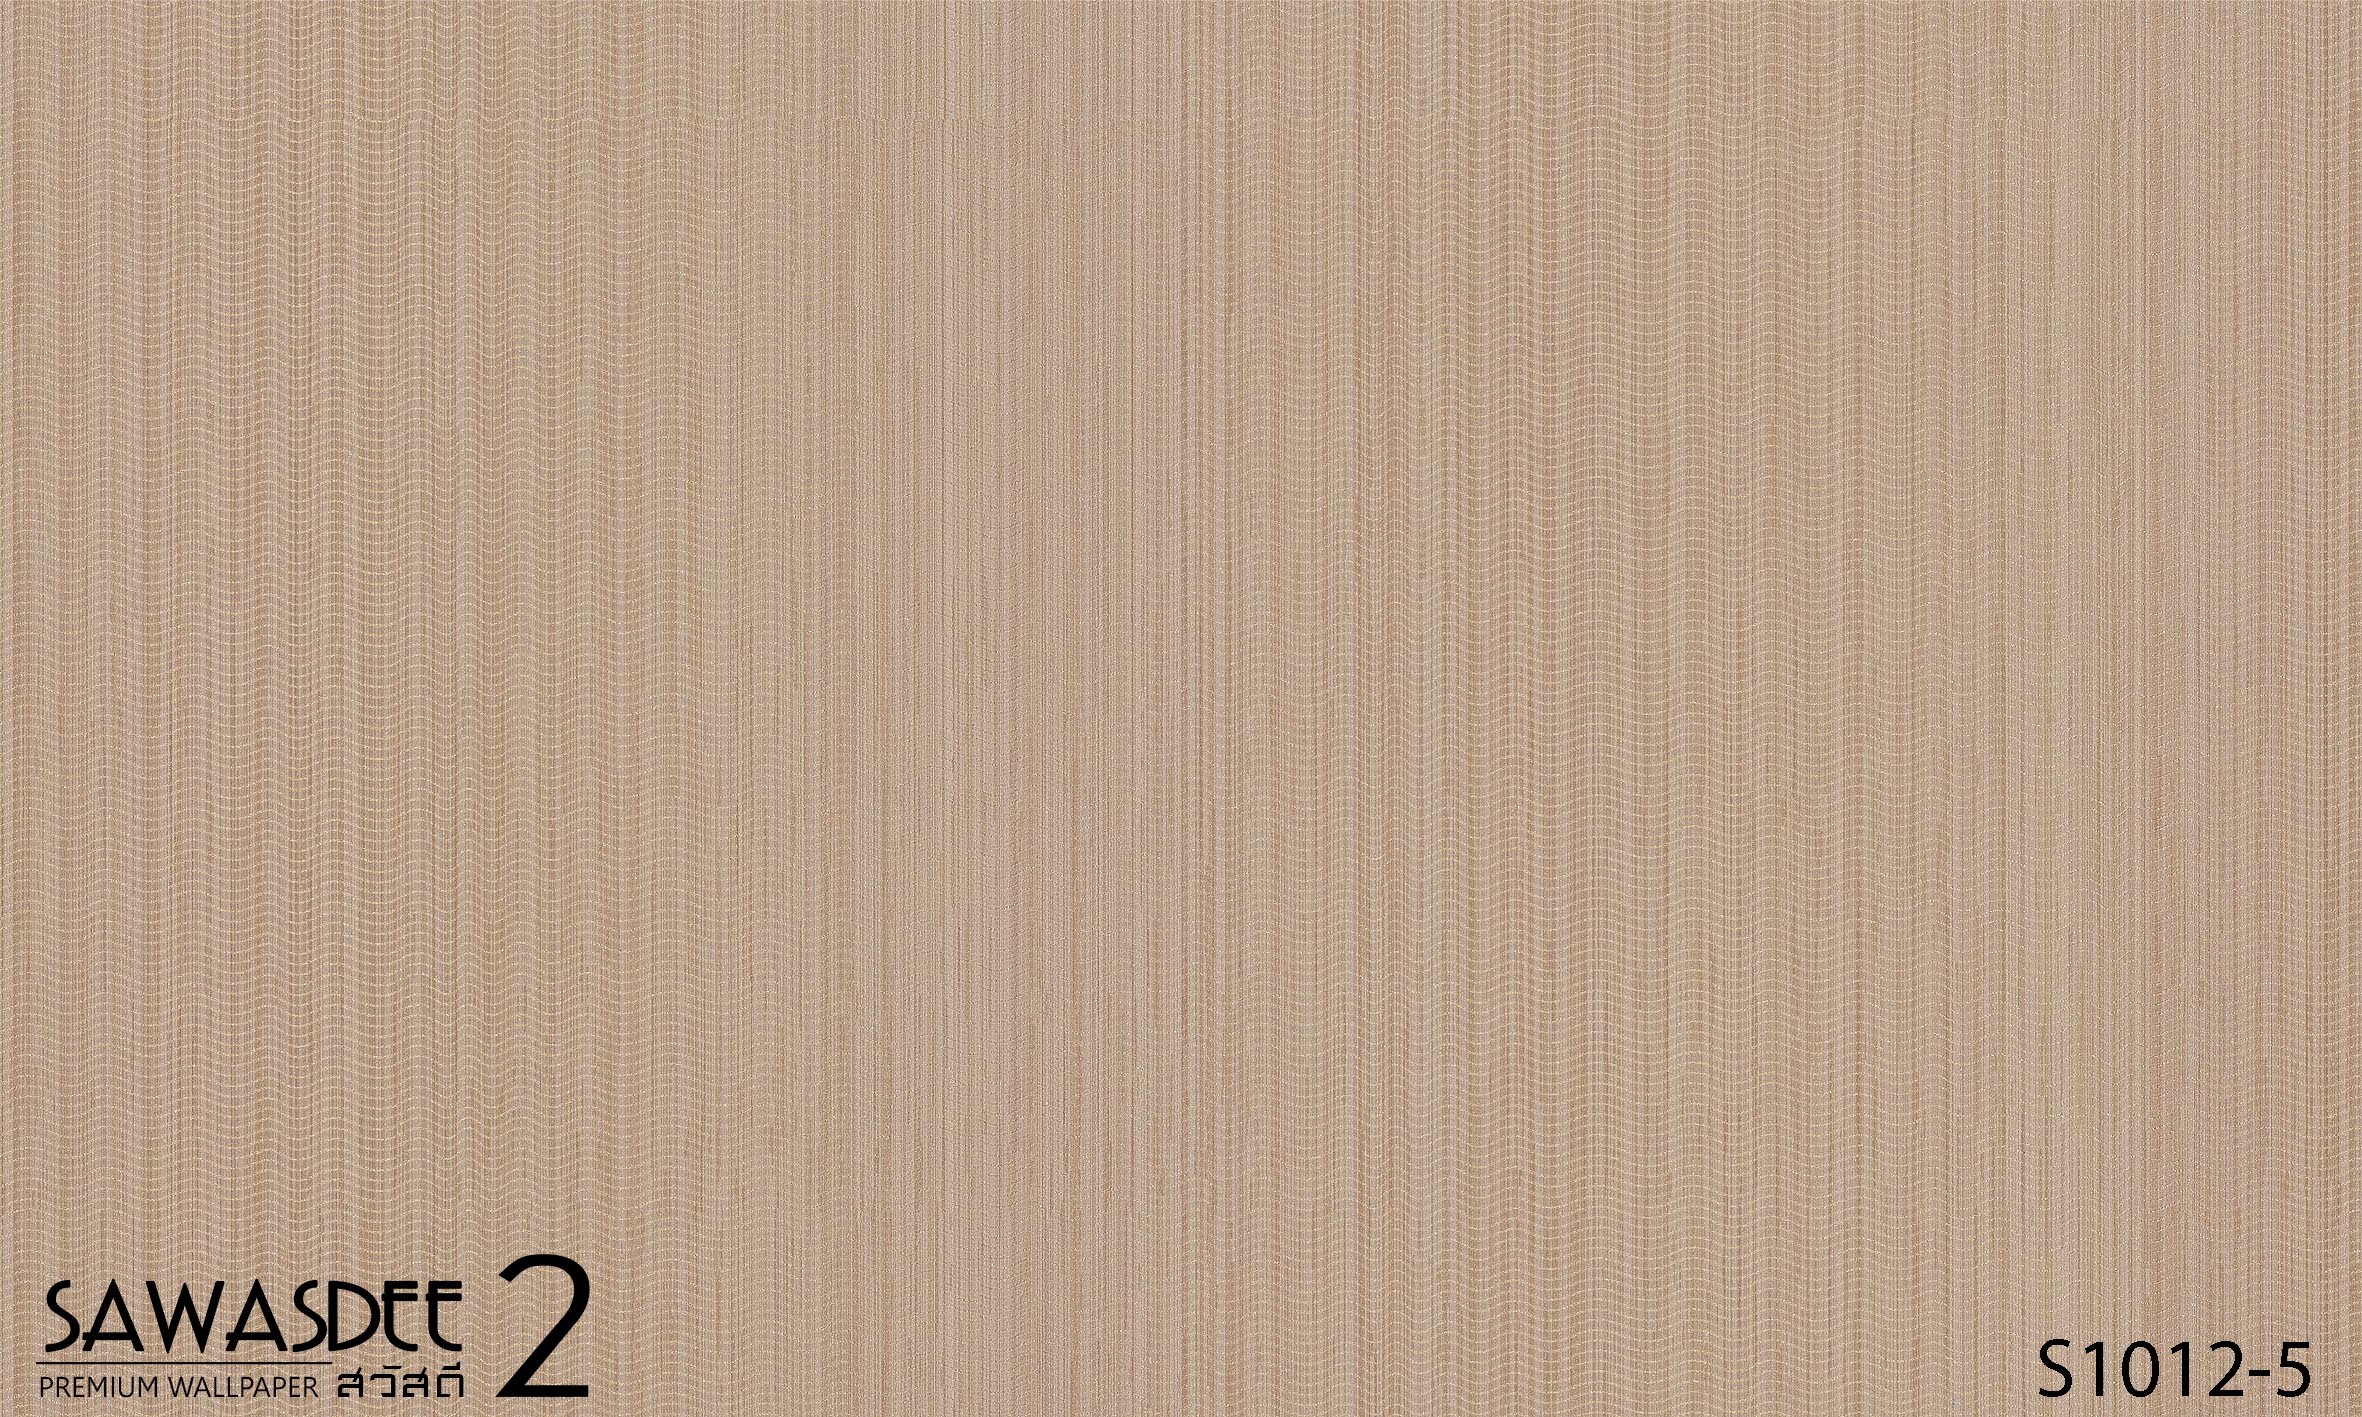 Wallpaper (SAWASDEE 2) S1012-5